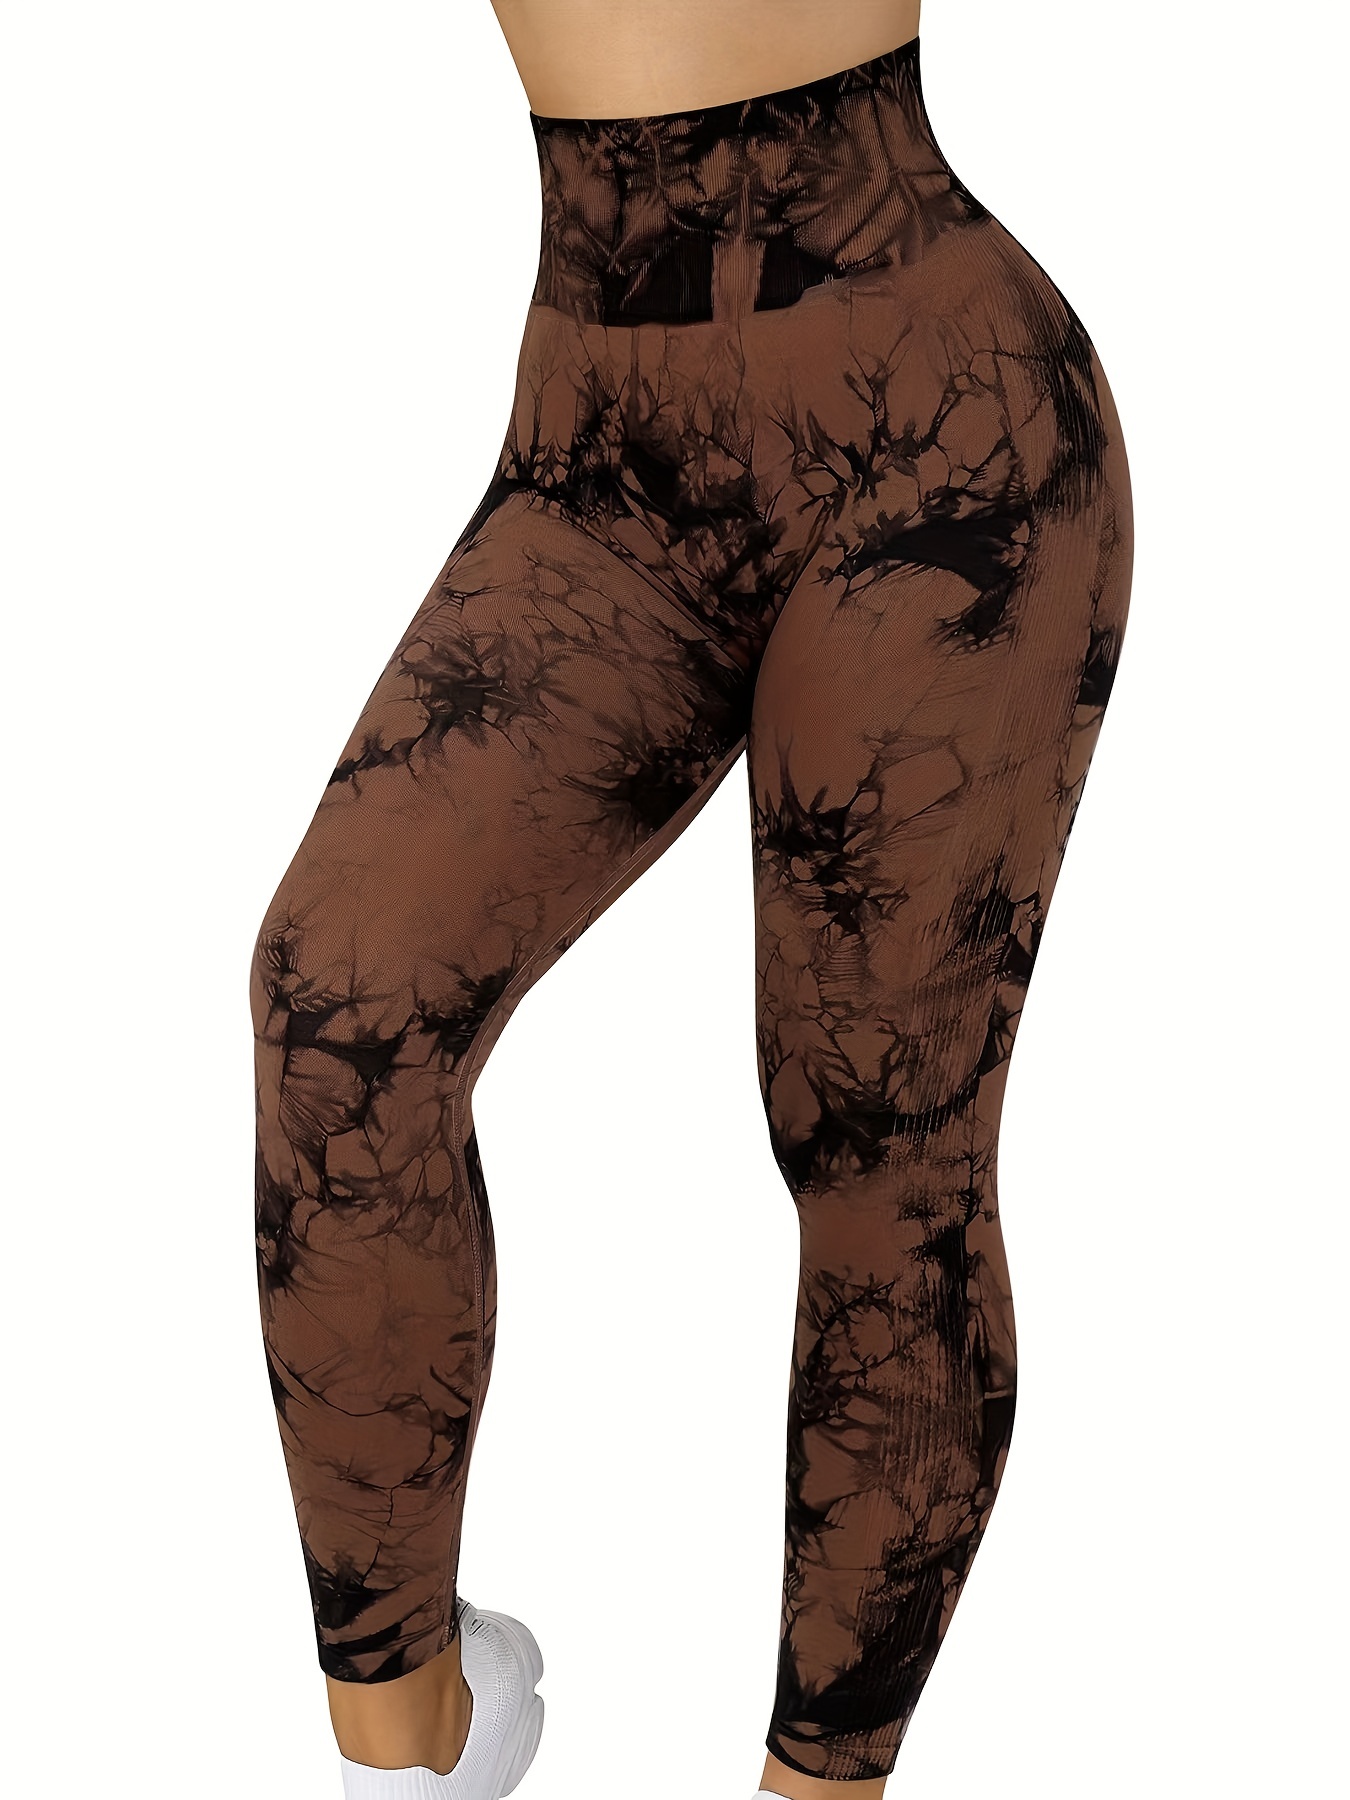 Women's Active XL Leopard Print Workout Leggings. • High rise